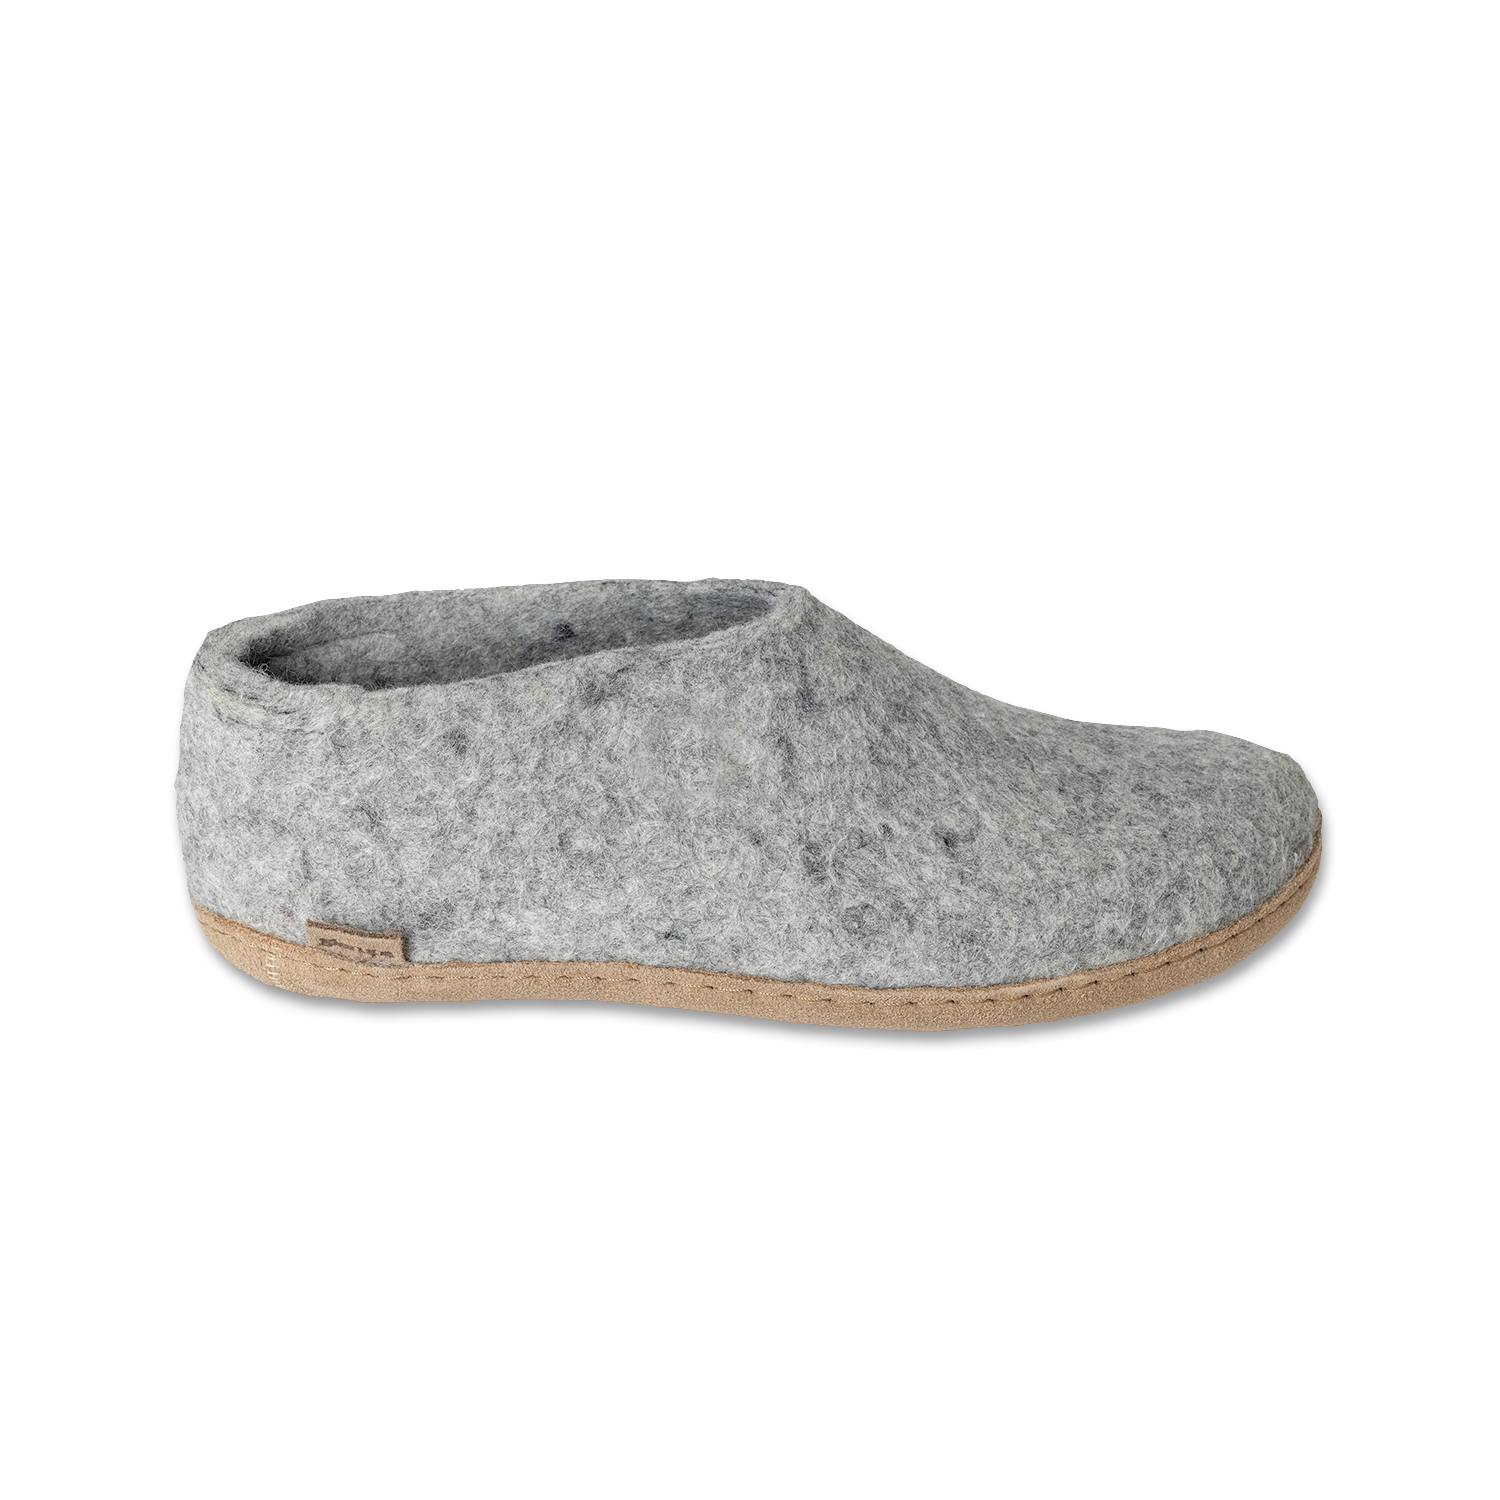 Glerups Shoe Grey